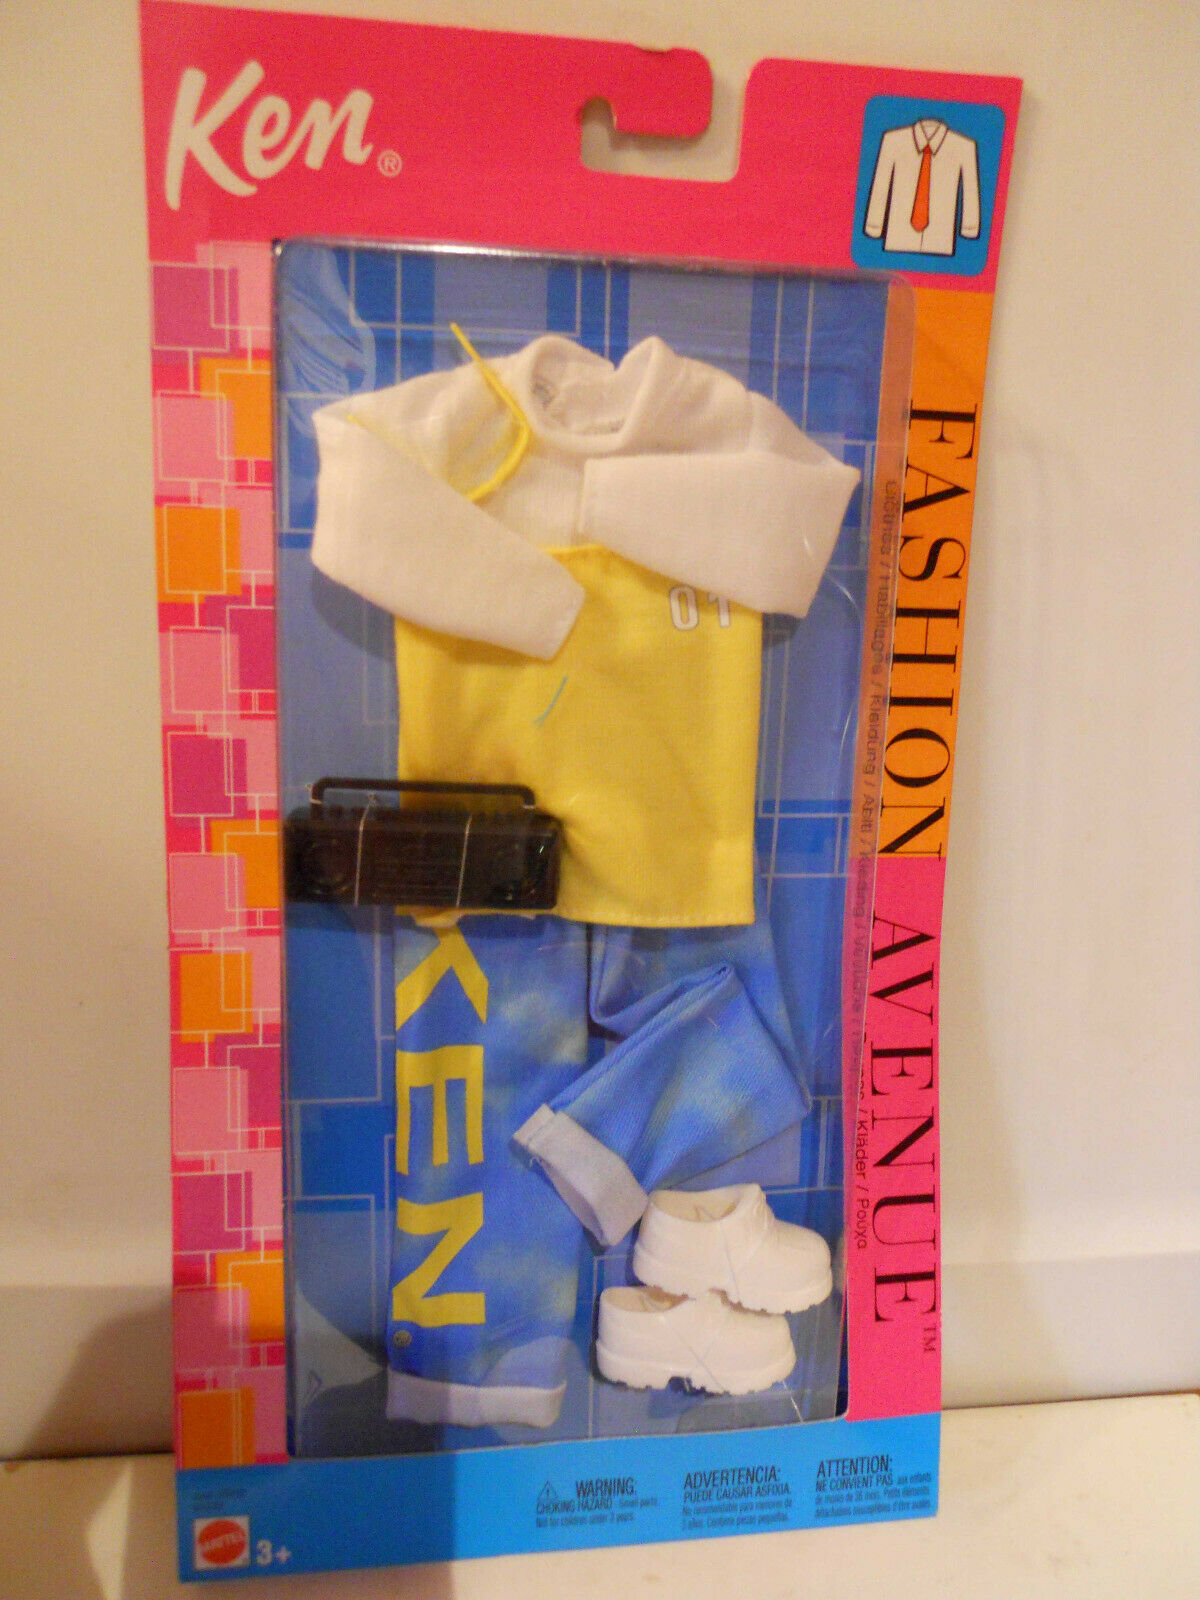 Barbie Fashion Avenue Ken Shirt Tie Icon 2002 25752 Yellow Shirt Jeans Boombox